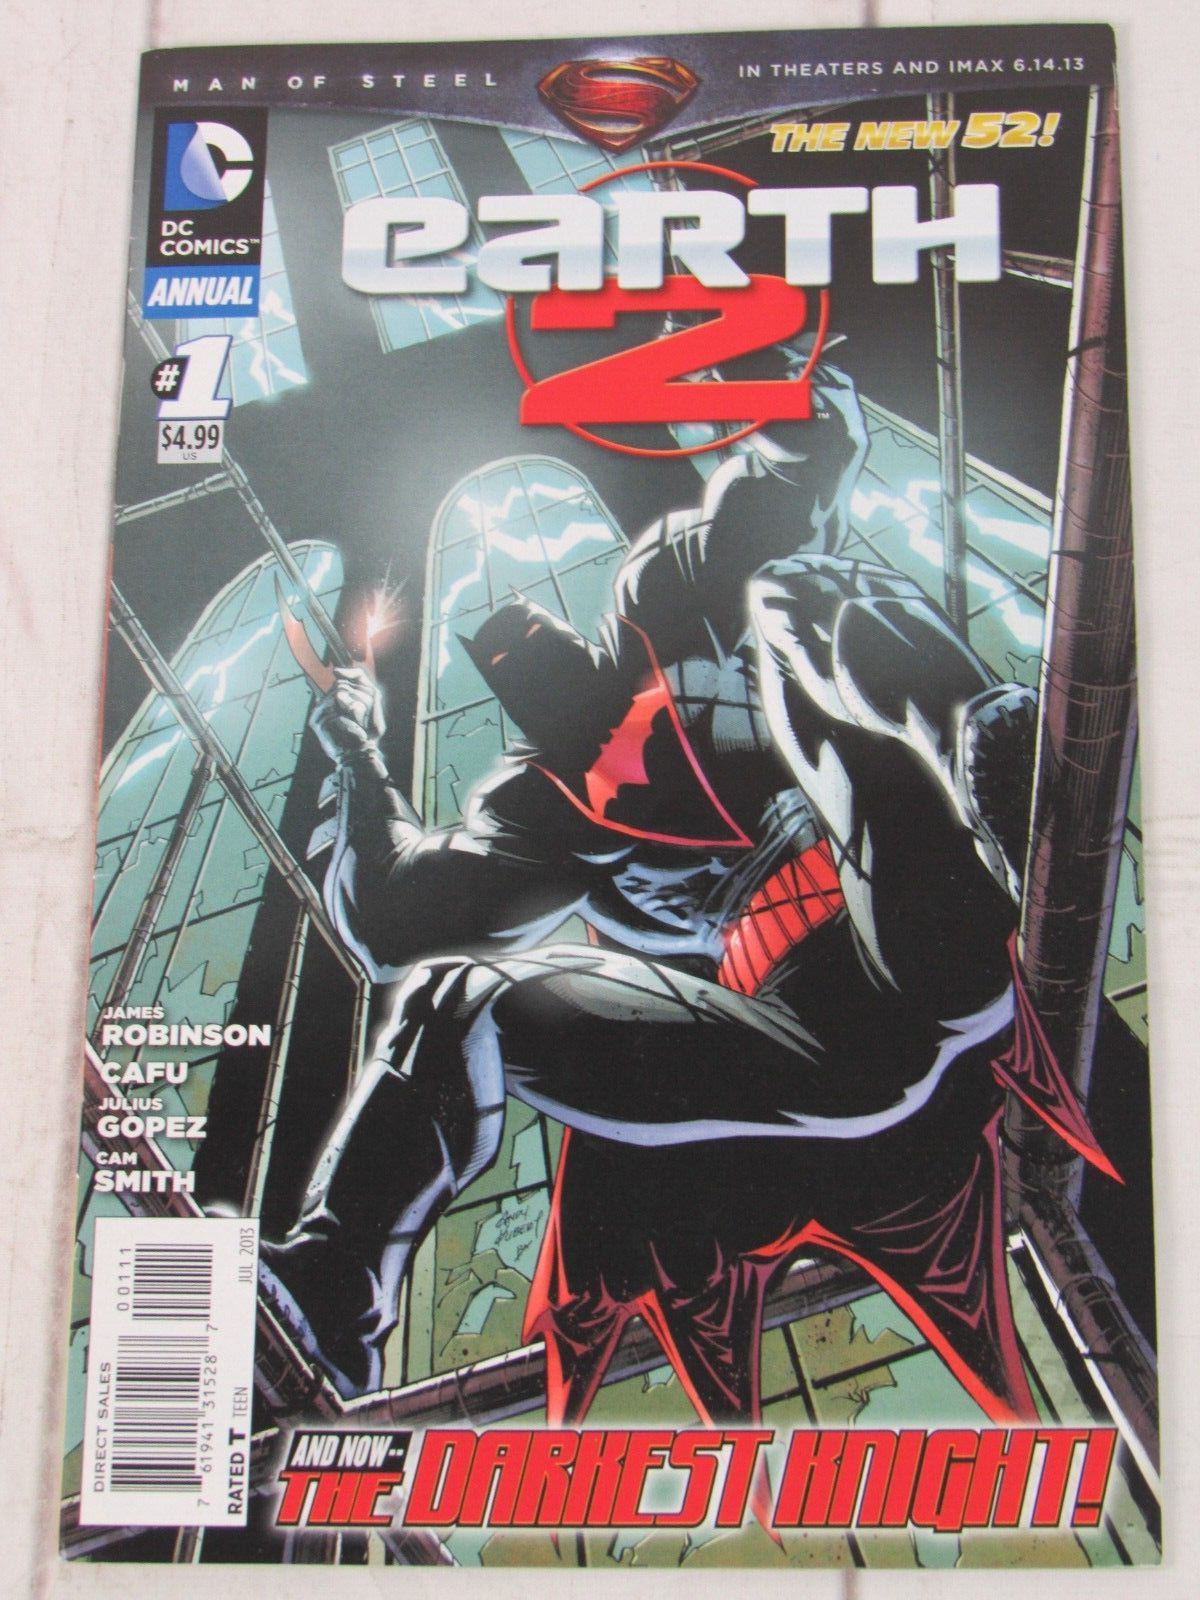 Earth 2 Annual #1 July 2013 DC Comics